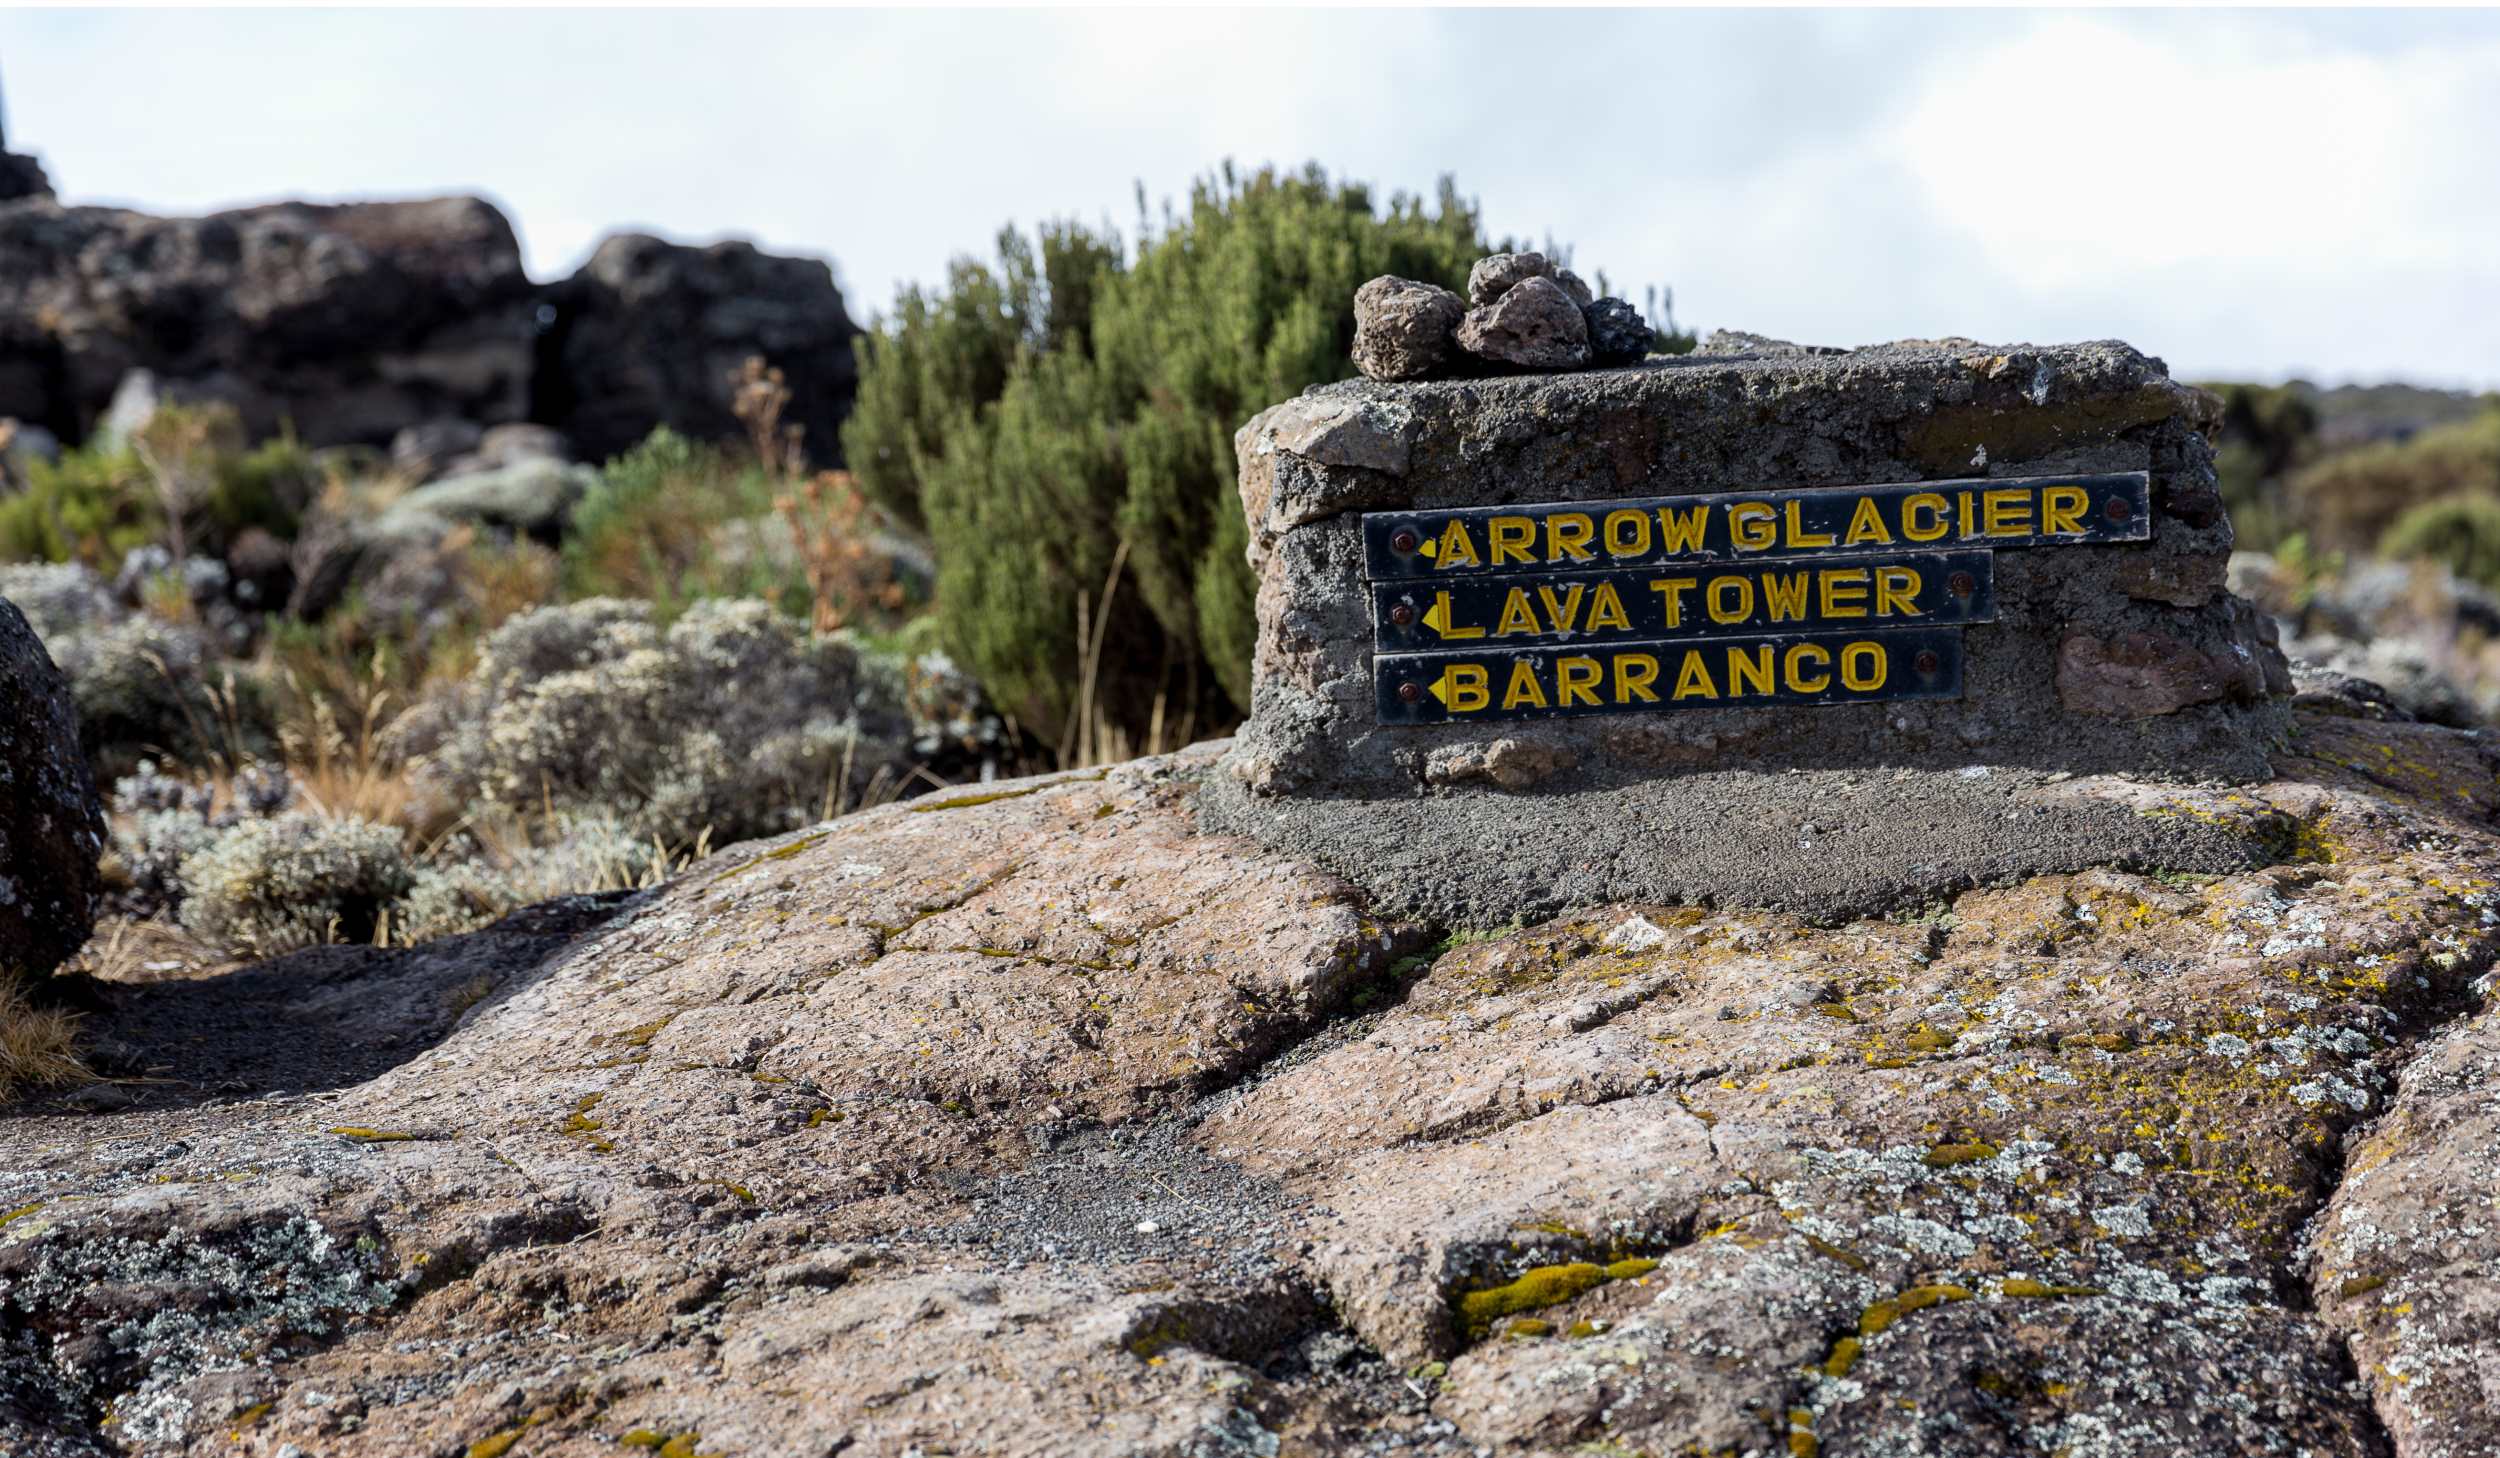 Ruta de Lemosho 7 días, día 3: Campamento Shira 2 (3900 m/ 12,795 ft) - Lava Tower (4630 m/ 15,190 ft) - Campamento Barranco (3960 m/ 12,992 ft)